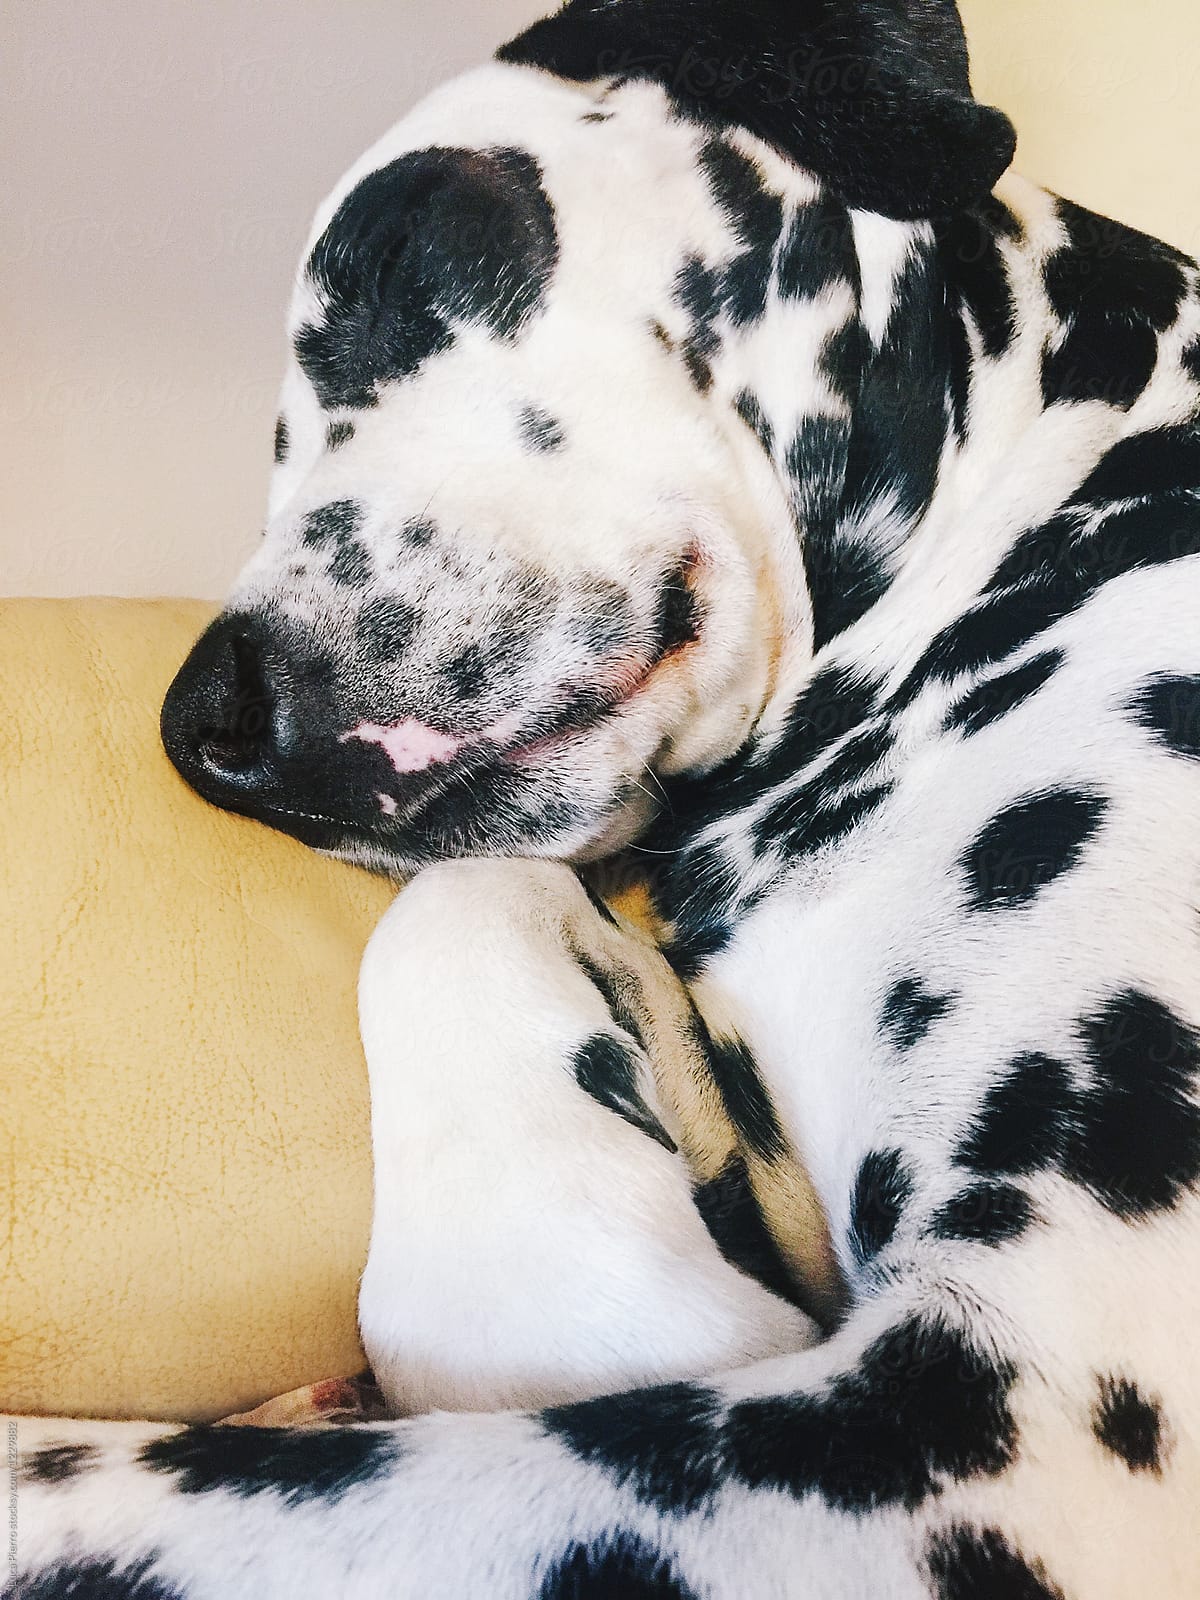 Cute dalmatian dog sleeping on an old sofa